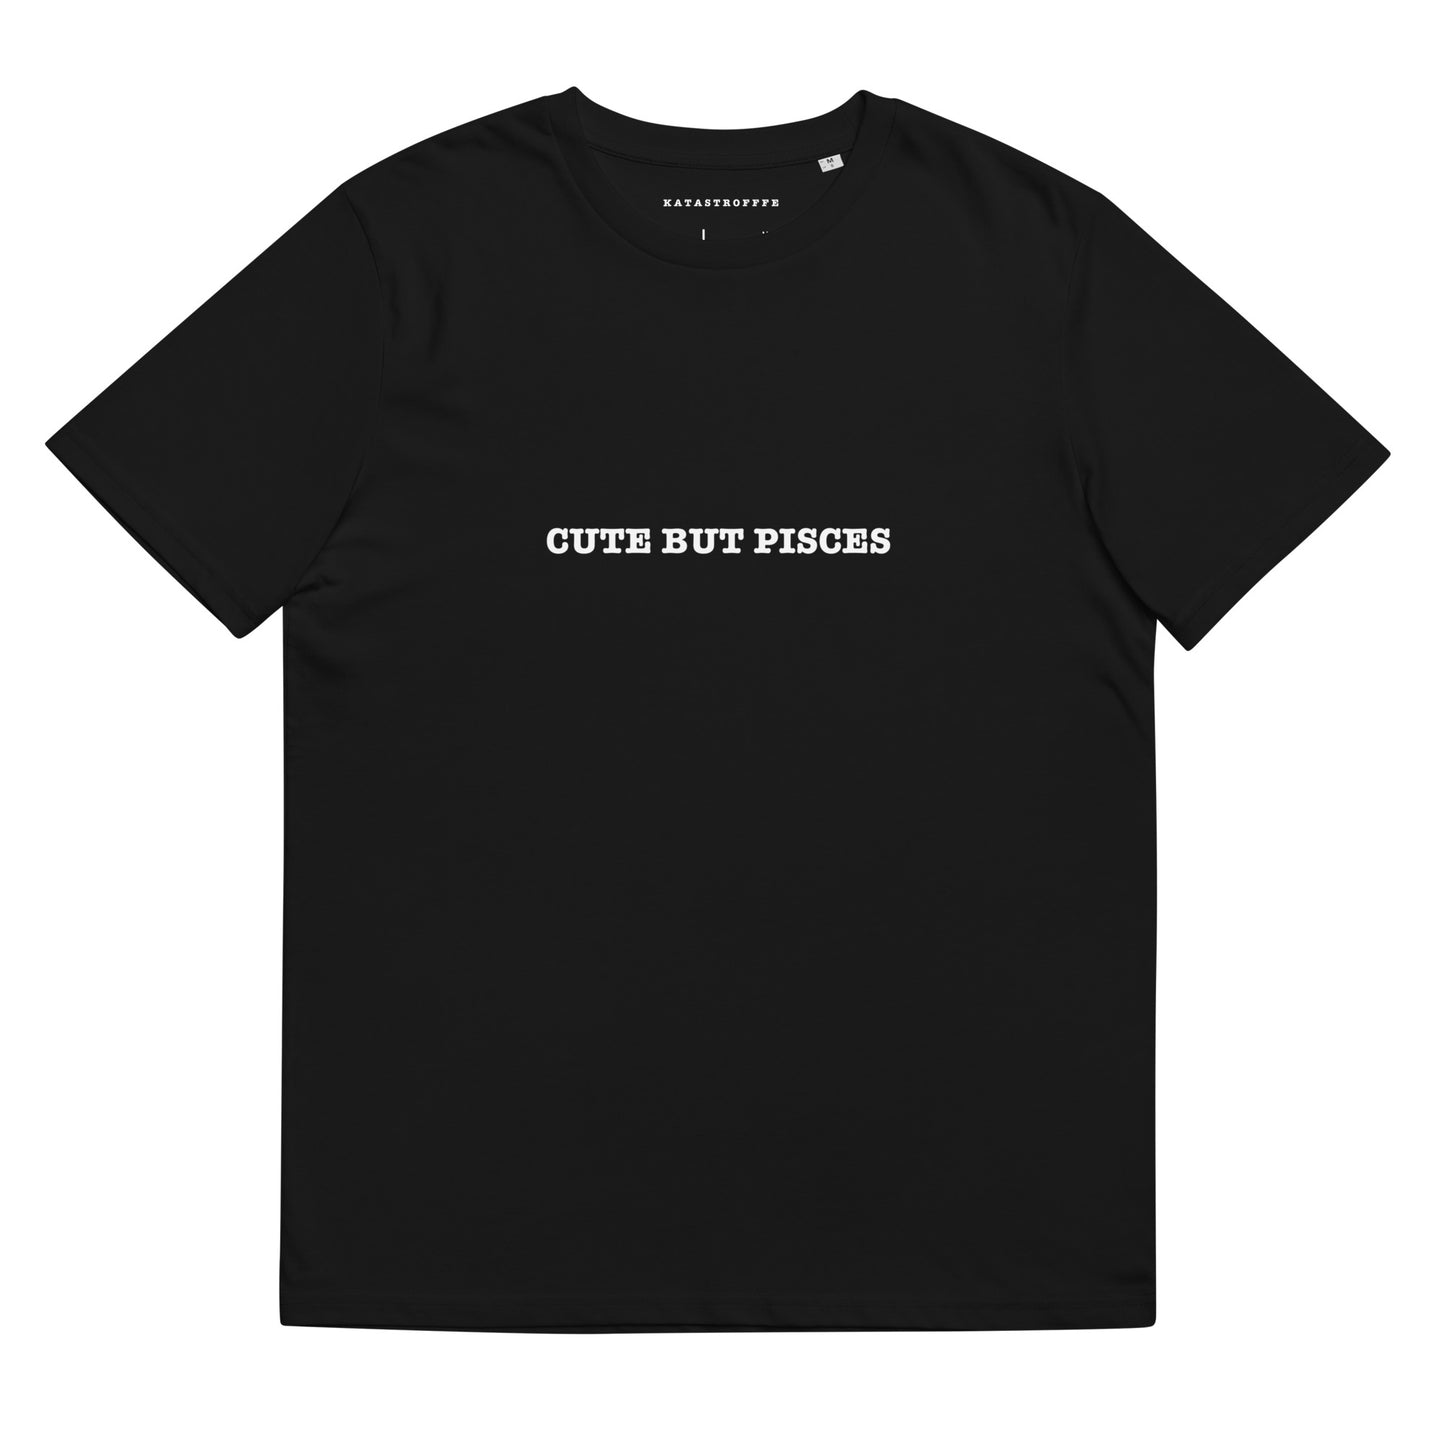 CUTE BUT PIECES Katastrofffe  Unisex organic cotton t-shirt